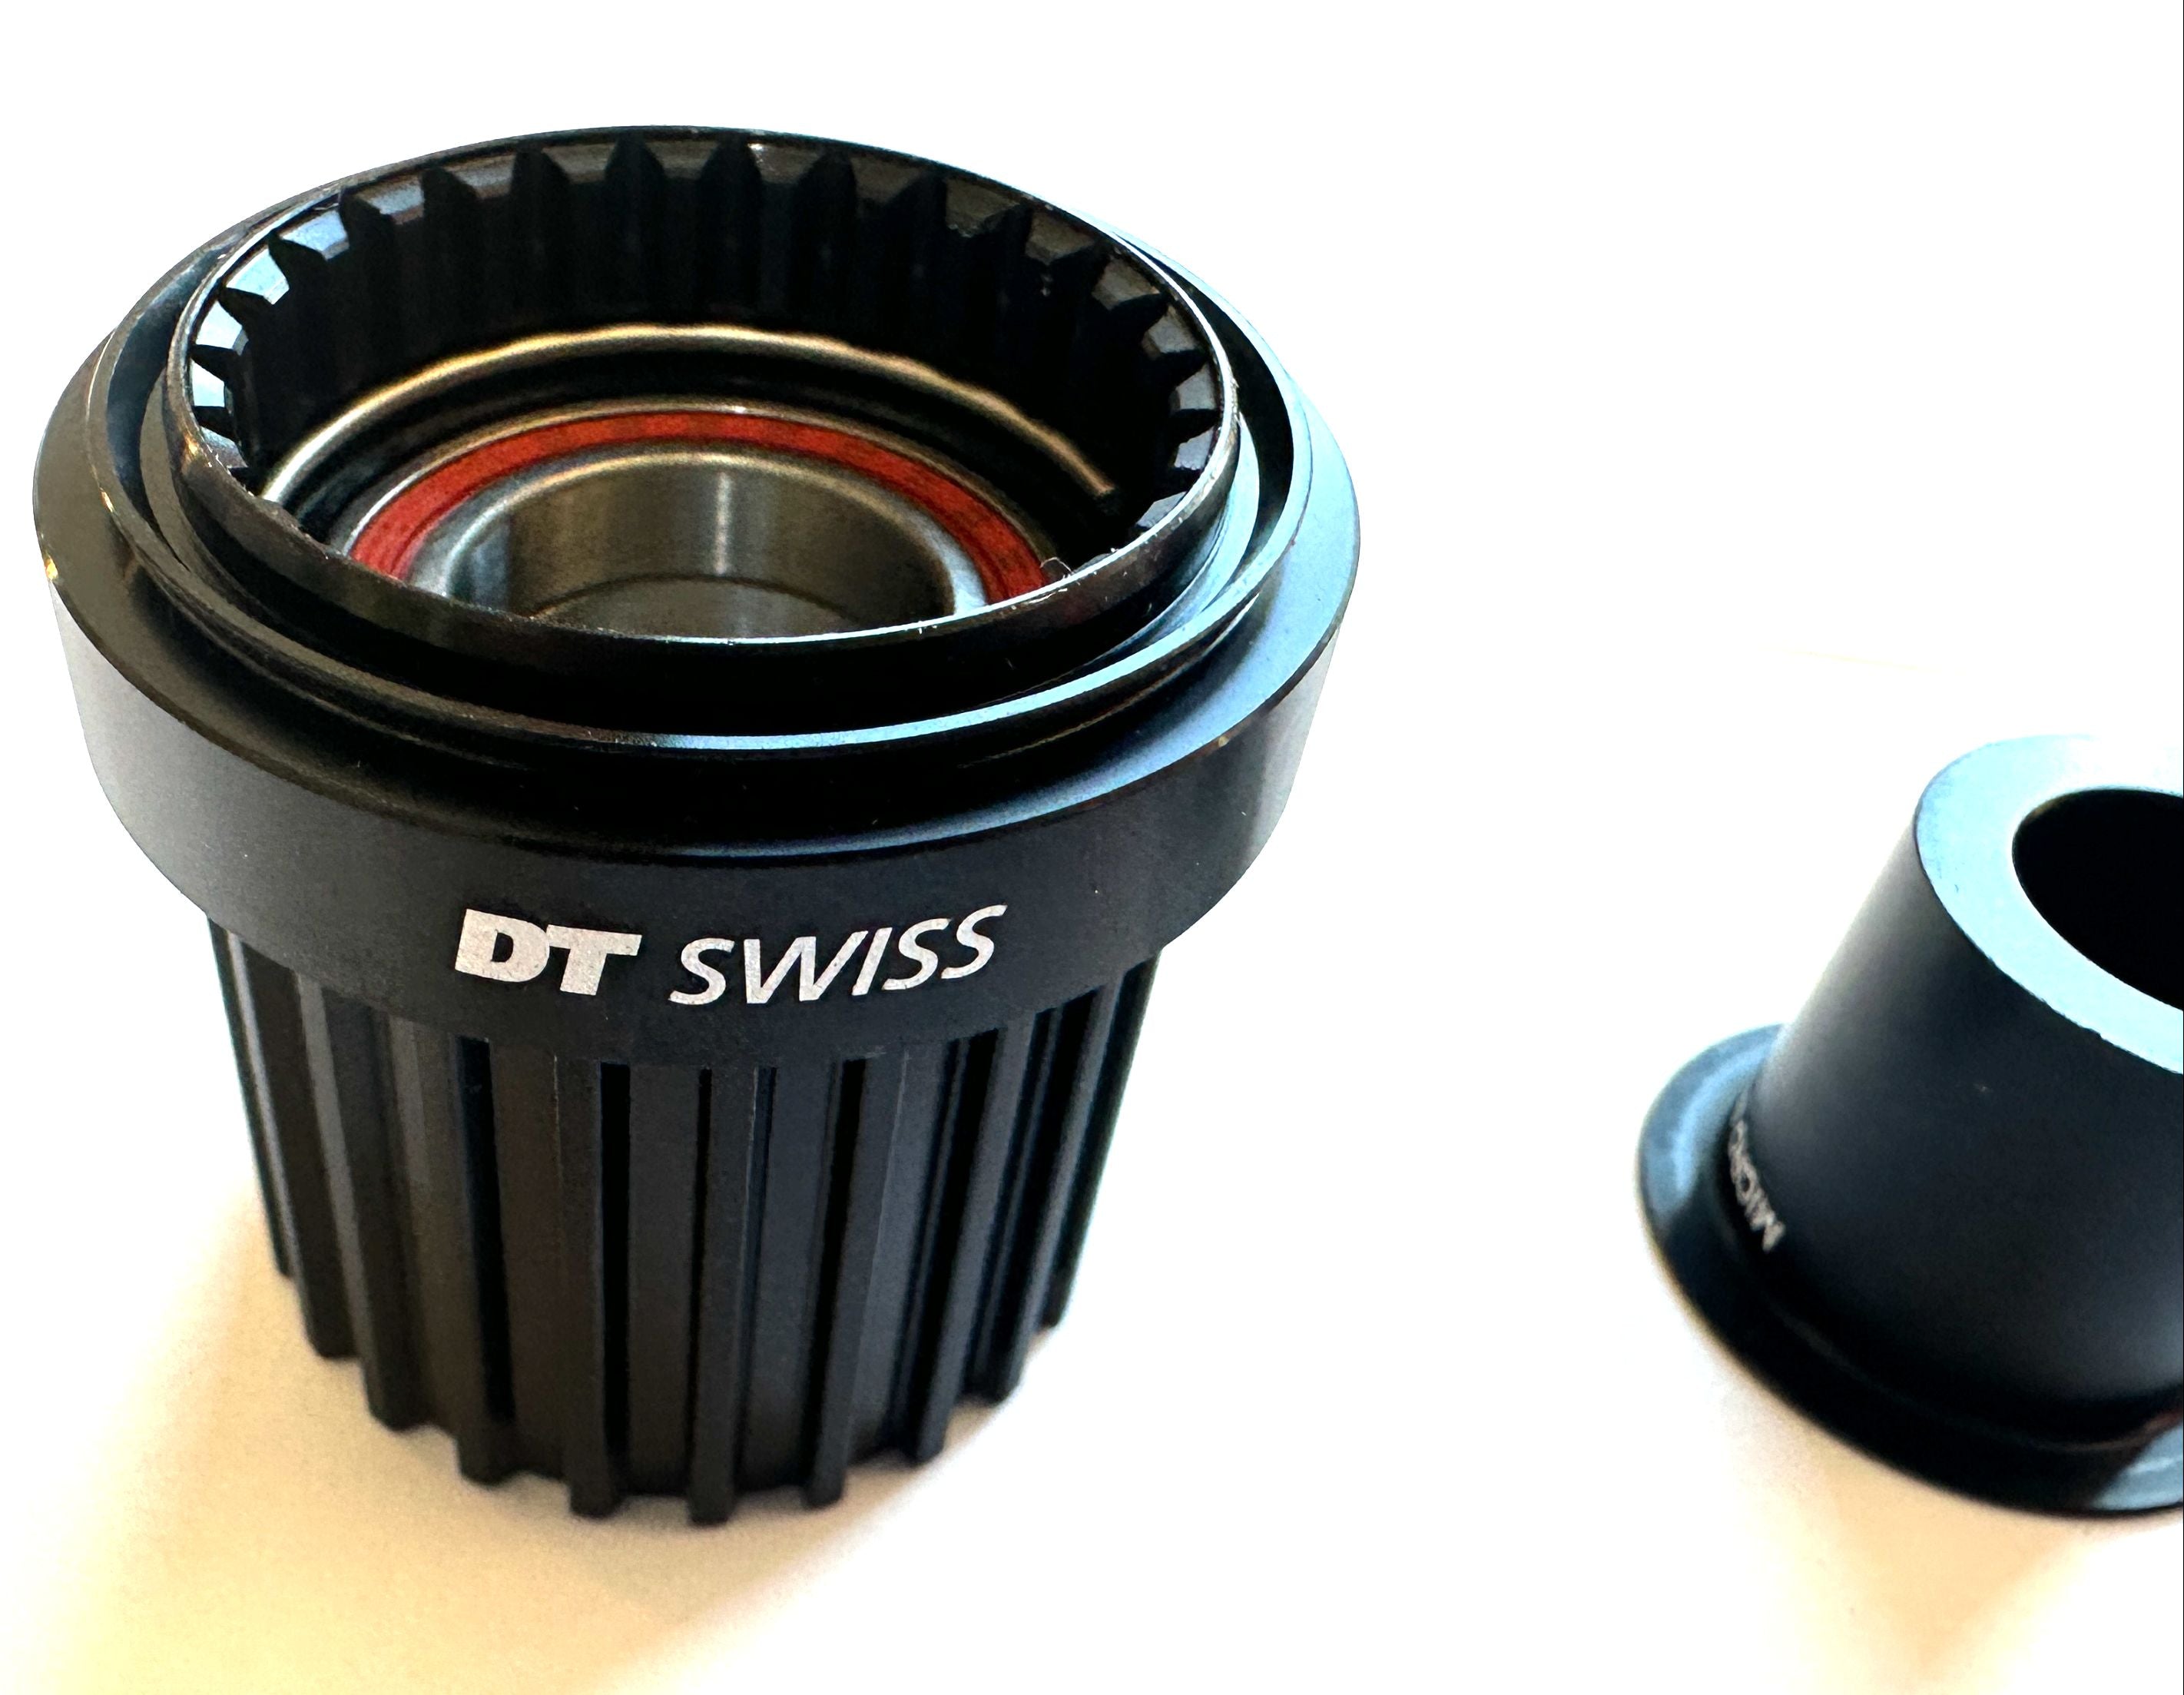 DT Swiss Ratchet Freehub Body Shimano Micro Spline Kit w/End Cap 12 x 142/148 mm